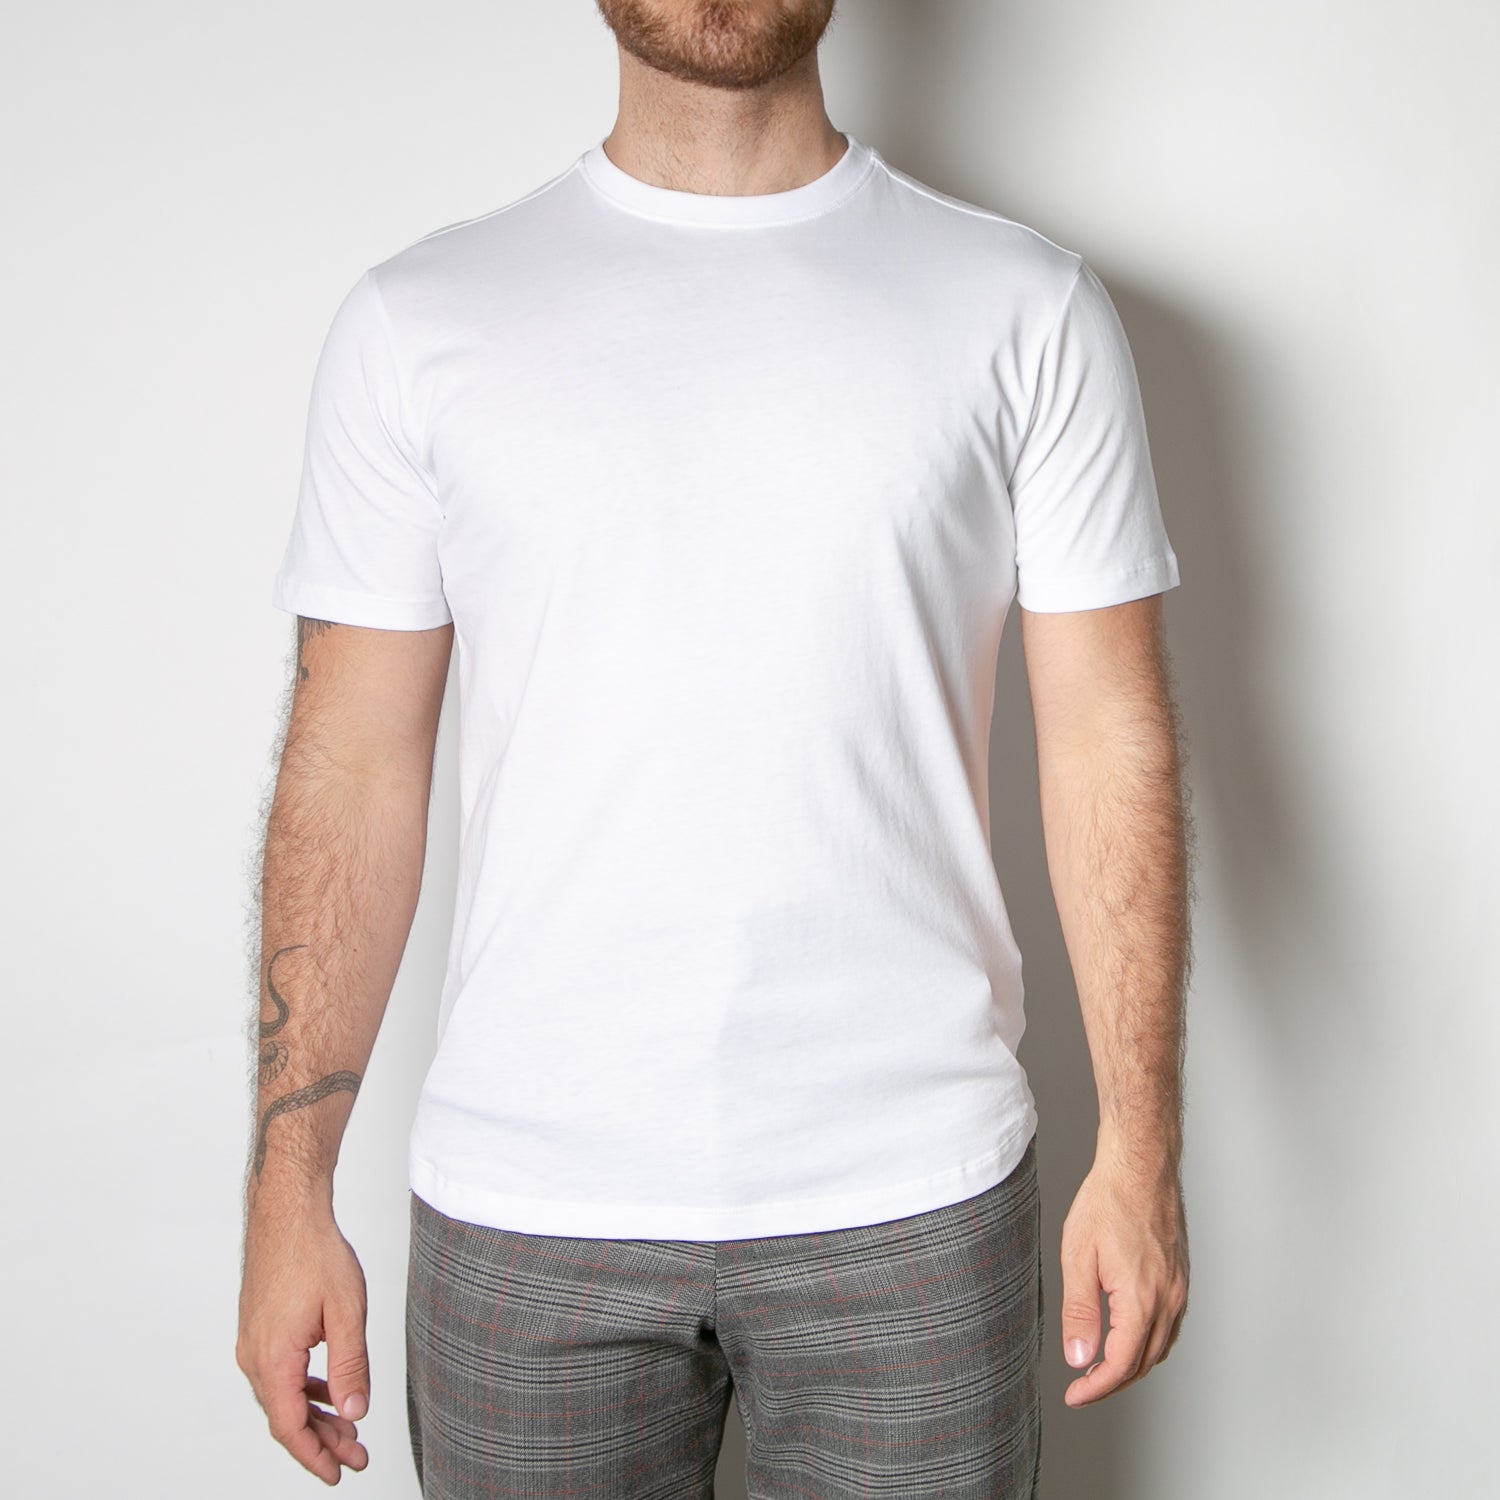 basic men's organic cotton white t-shirt by Secret Location